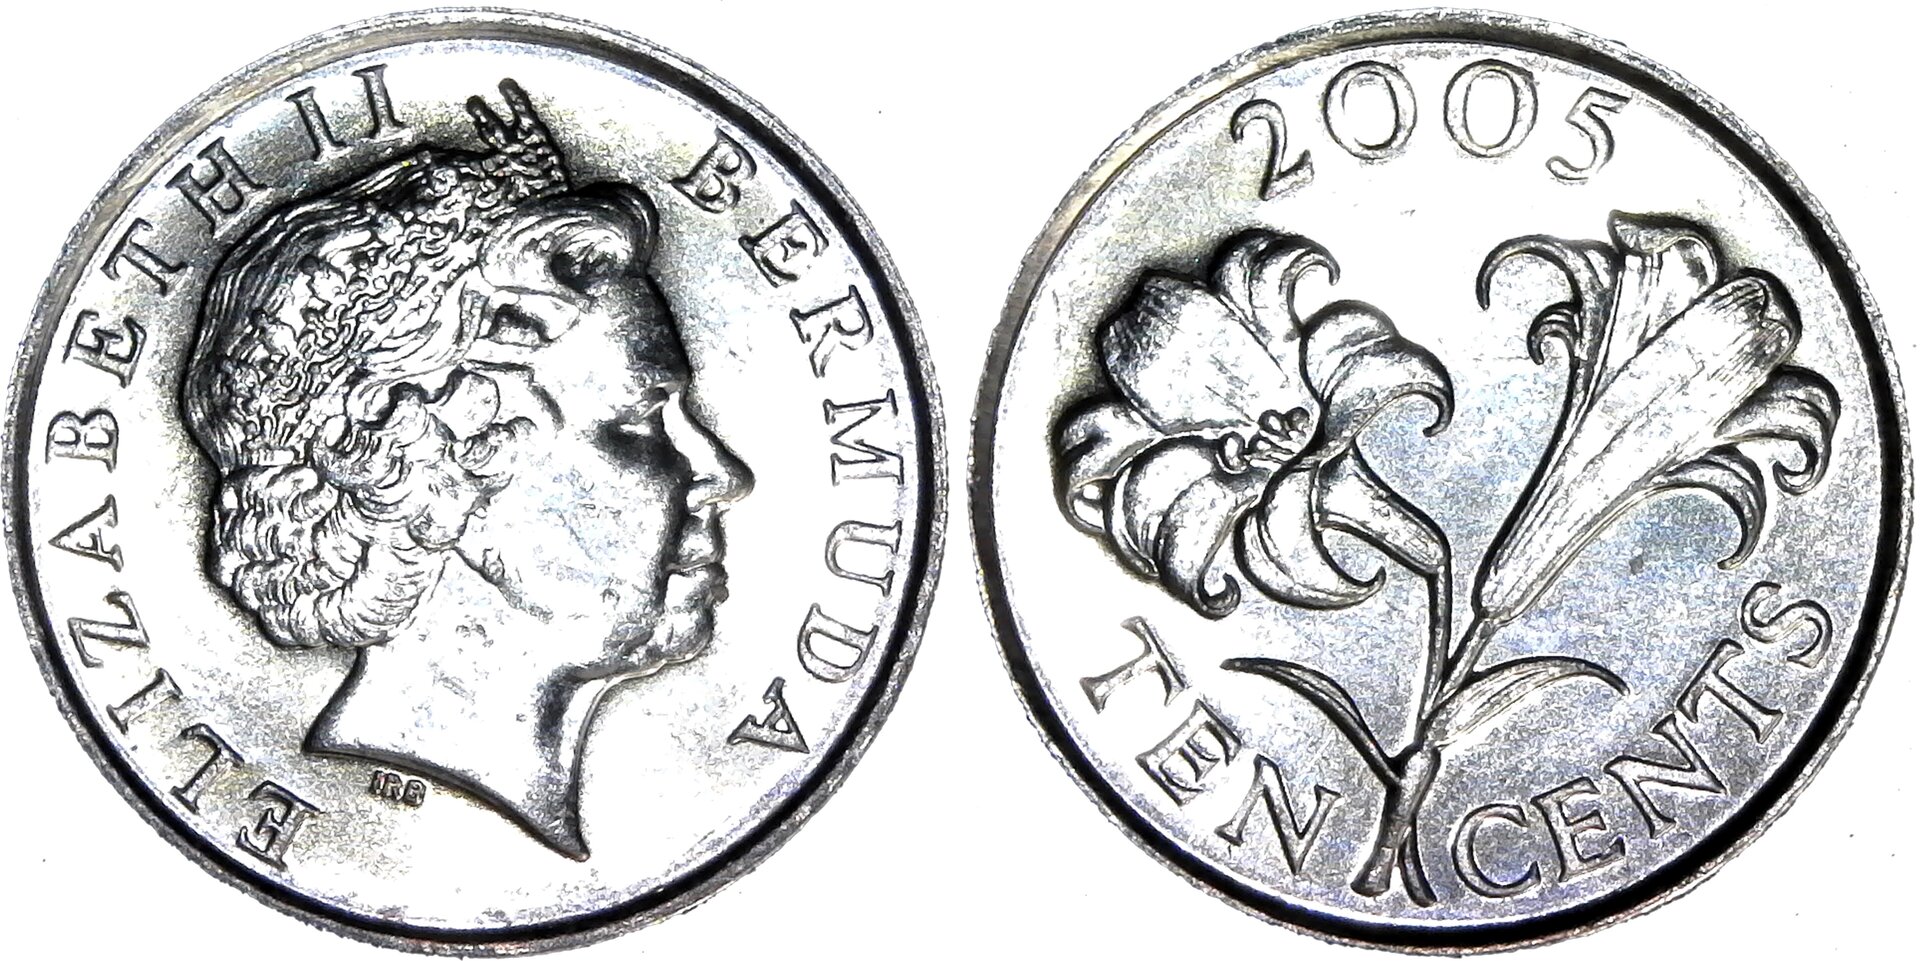 Bermuda  10 cents 2005 obv-side-cutout.jpg